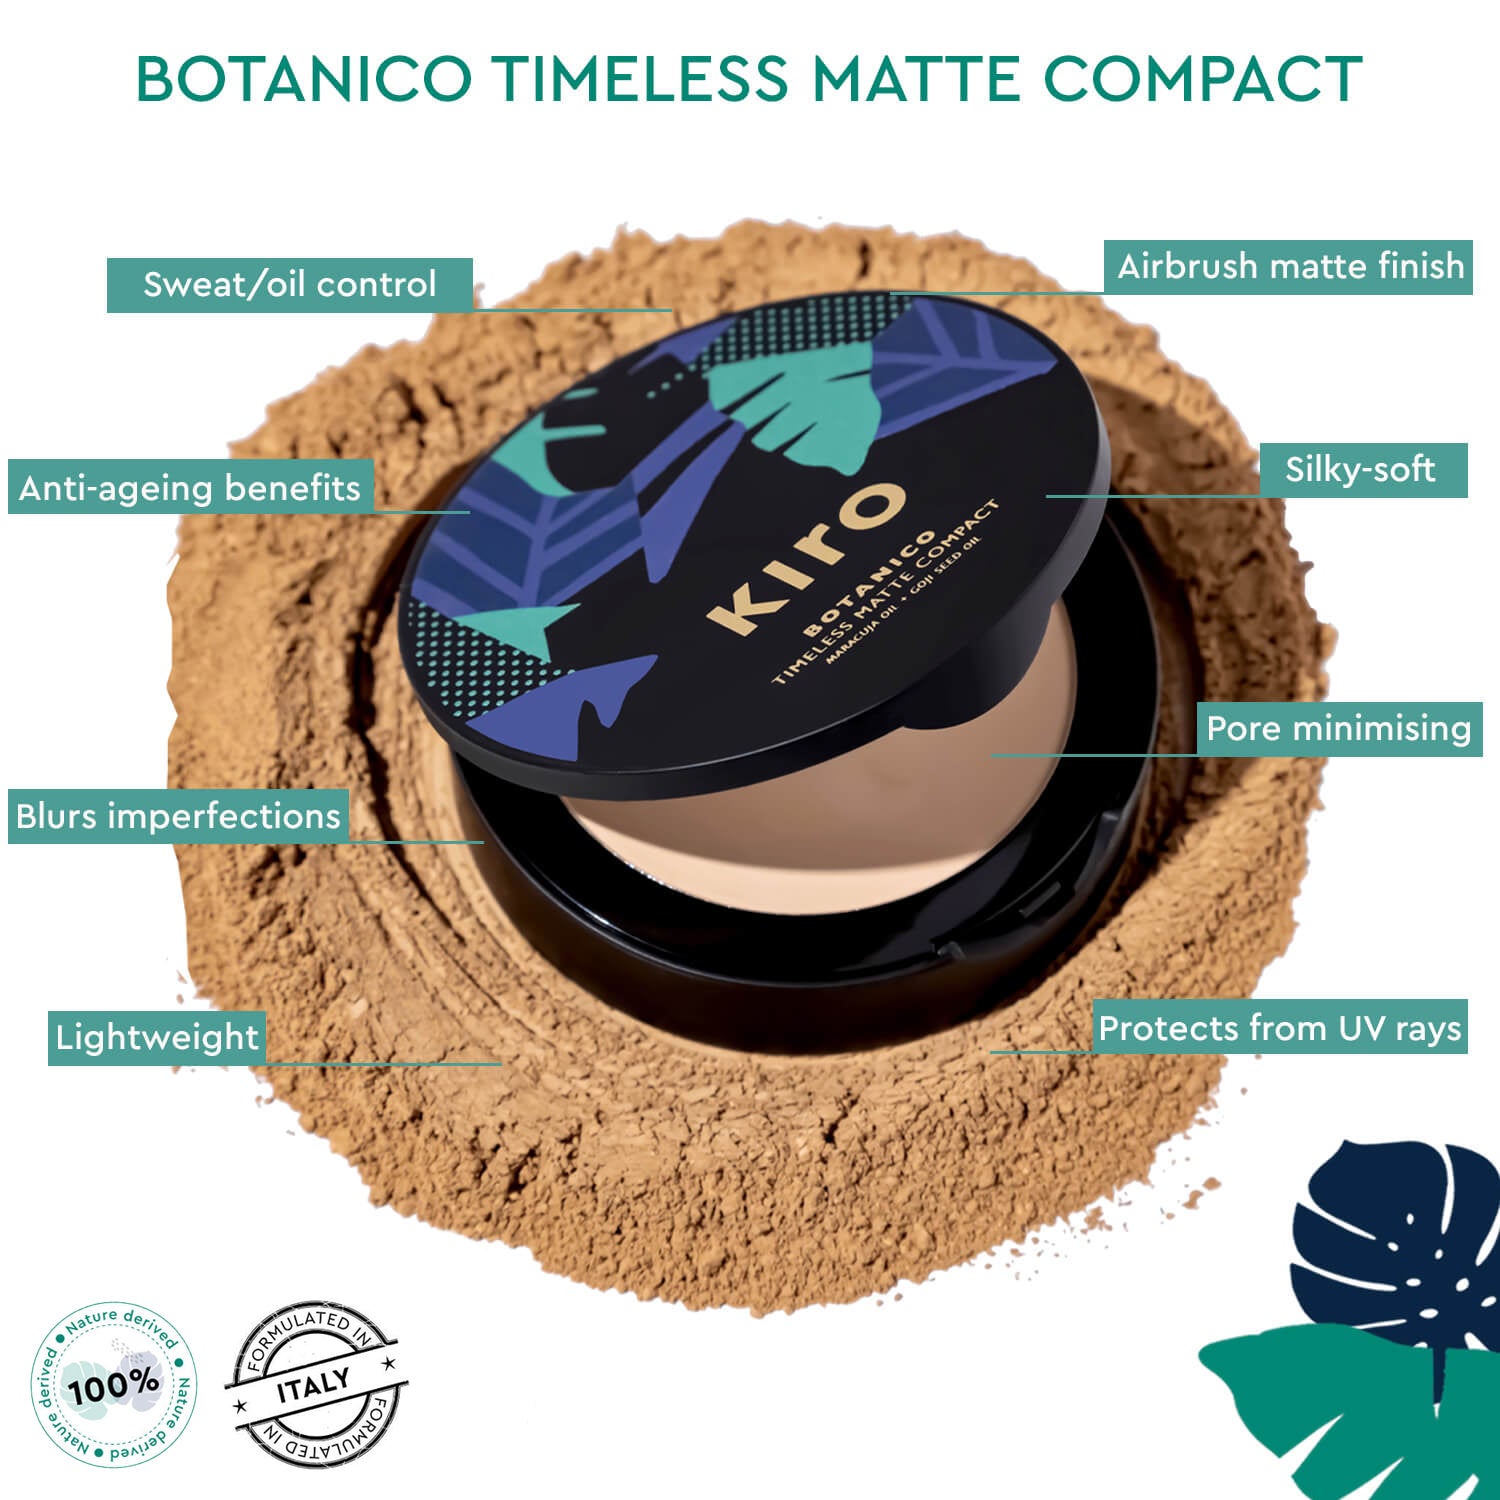 Botanico Timeless Matte Compact in Rocksalt Ivory Shade